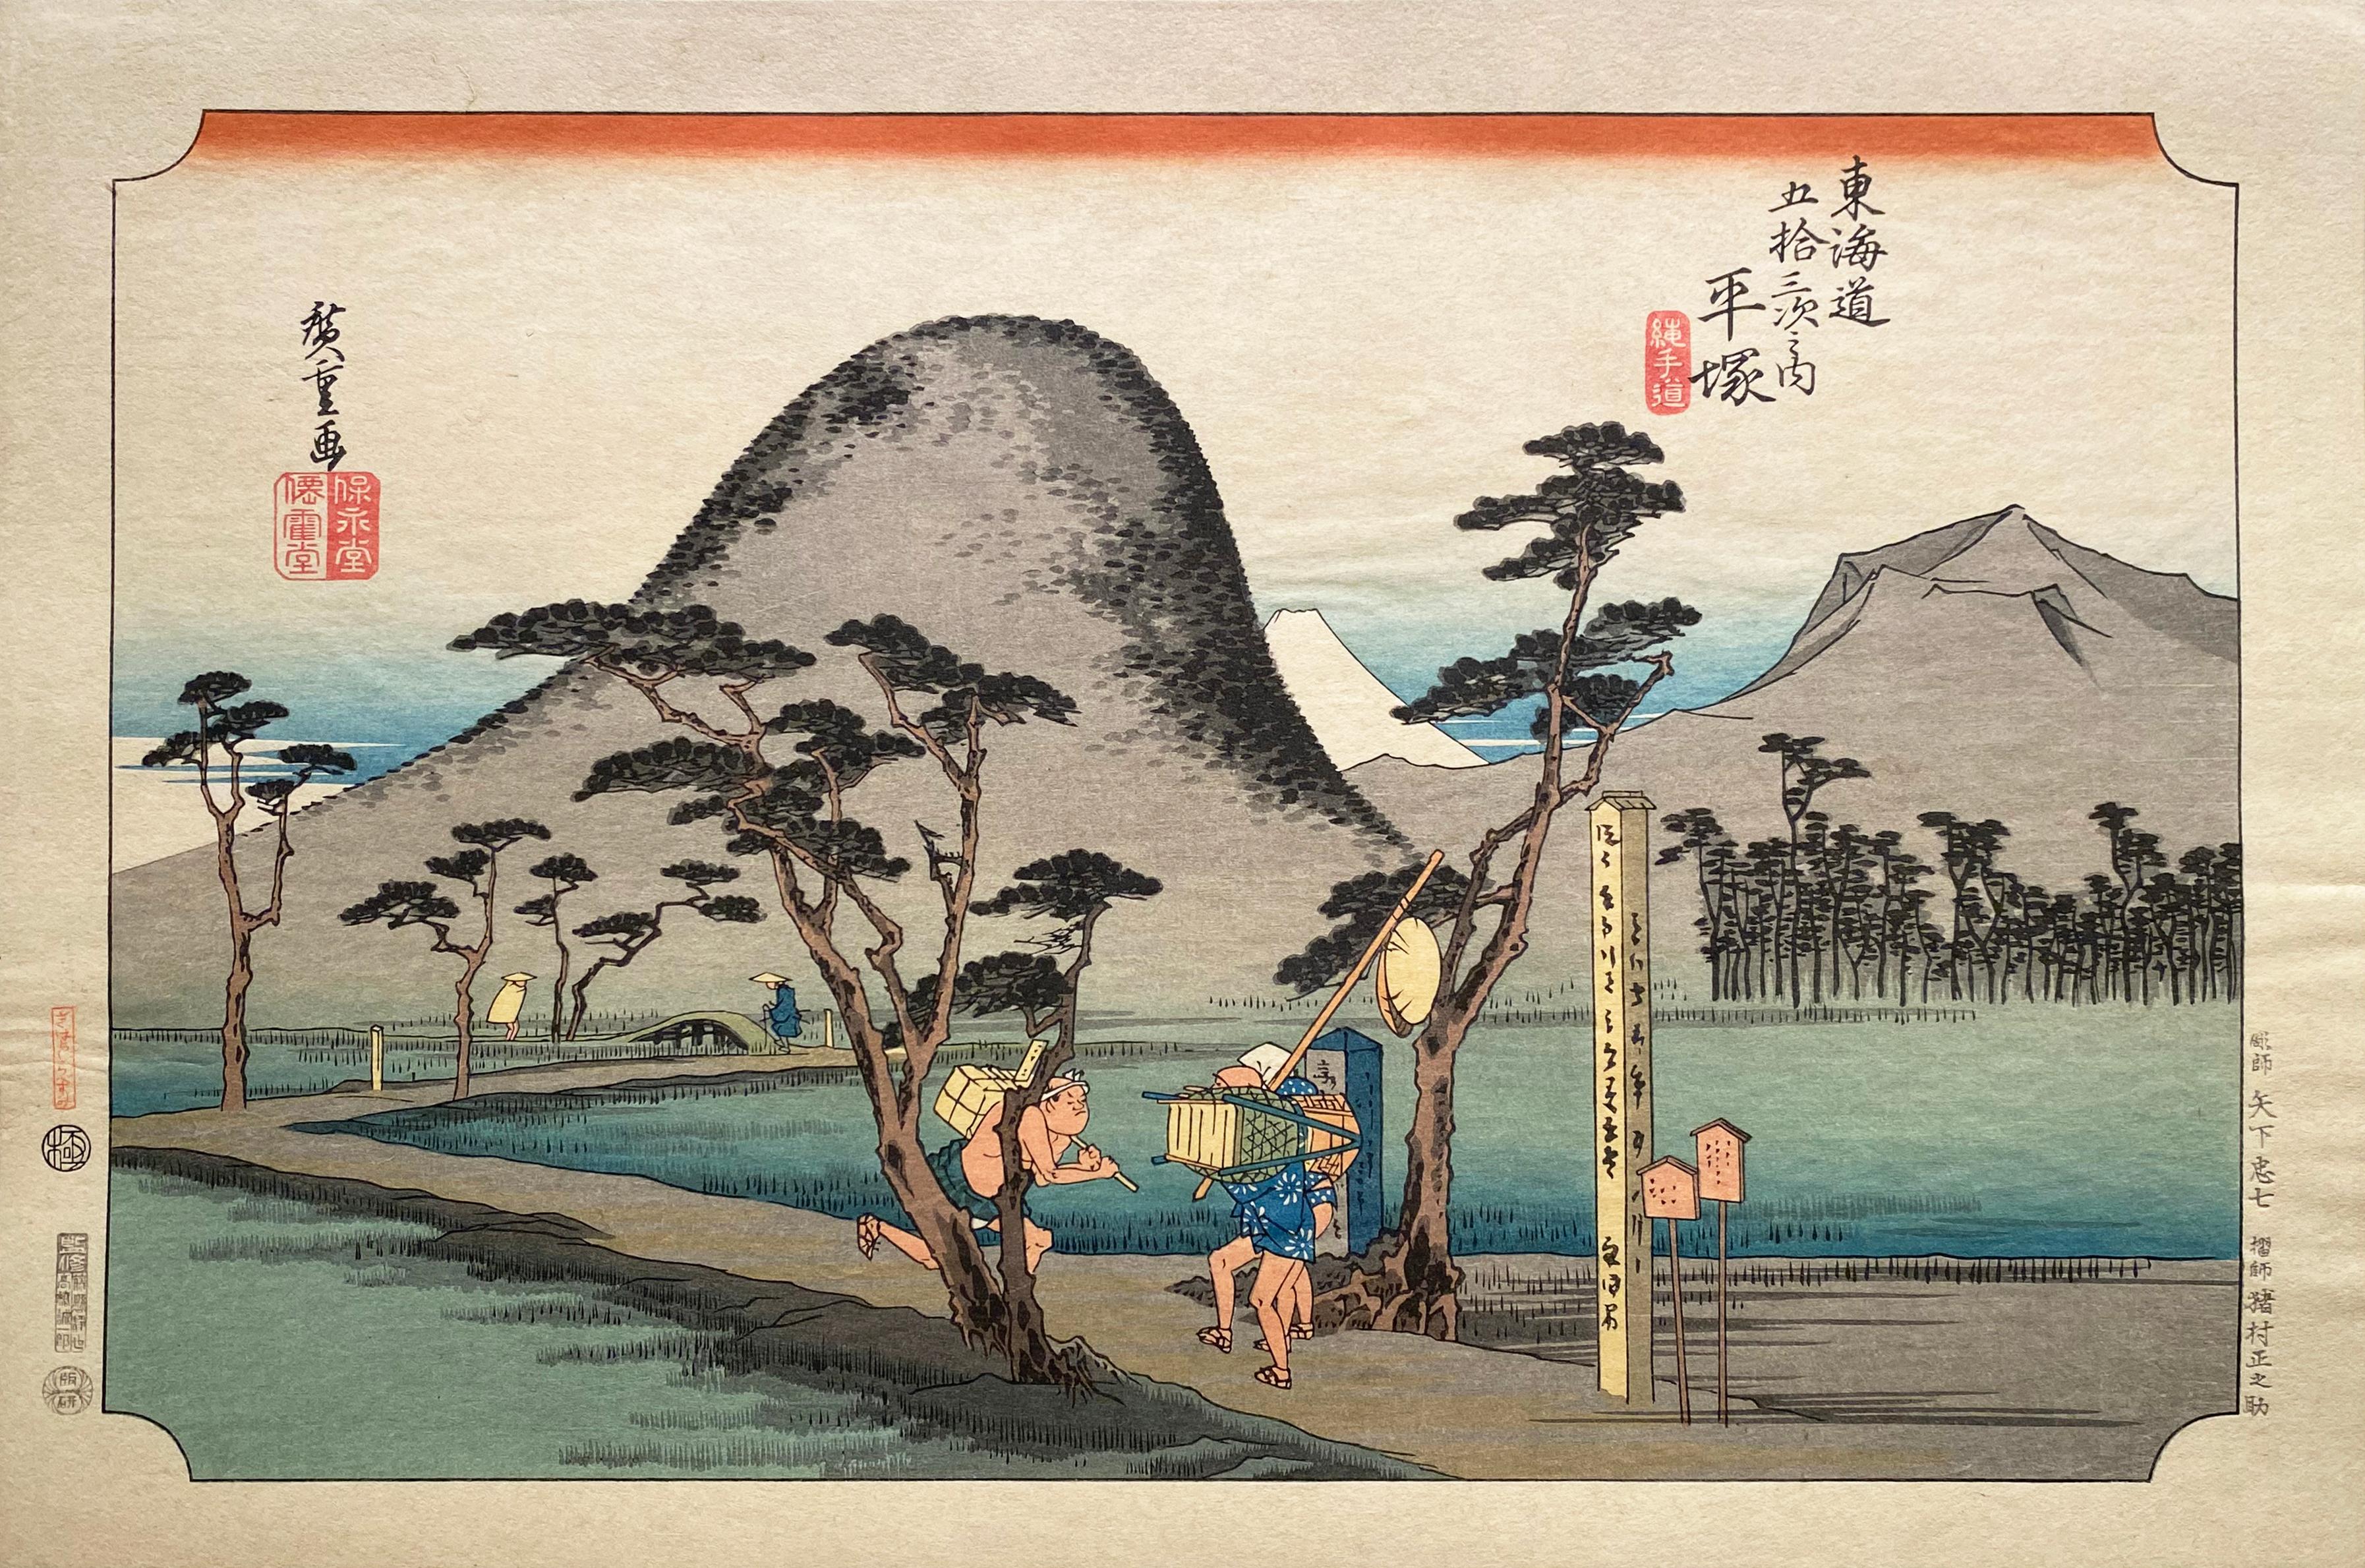 Utagawa Hiroshige (Ando Hiroshige) Landscape Print - 'View of Hiratsuka',  After Utagawa Hiroshige 歌川廣重, Ukiyo-e Woodblock, Tokaido